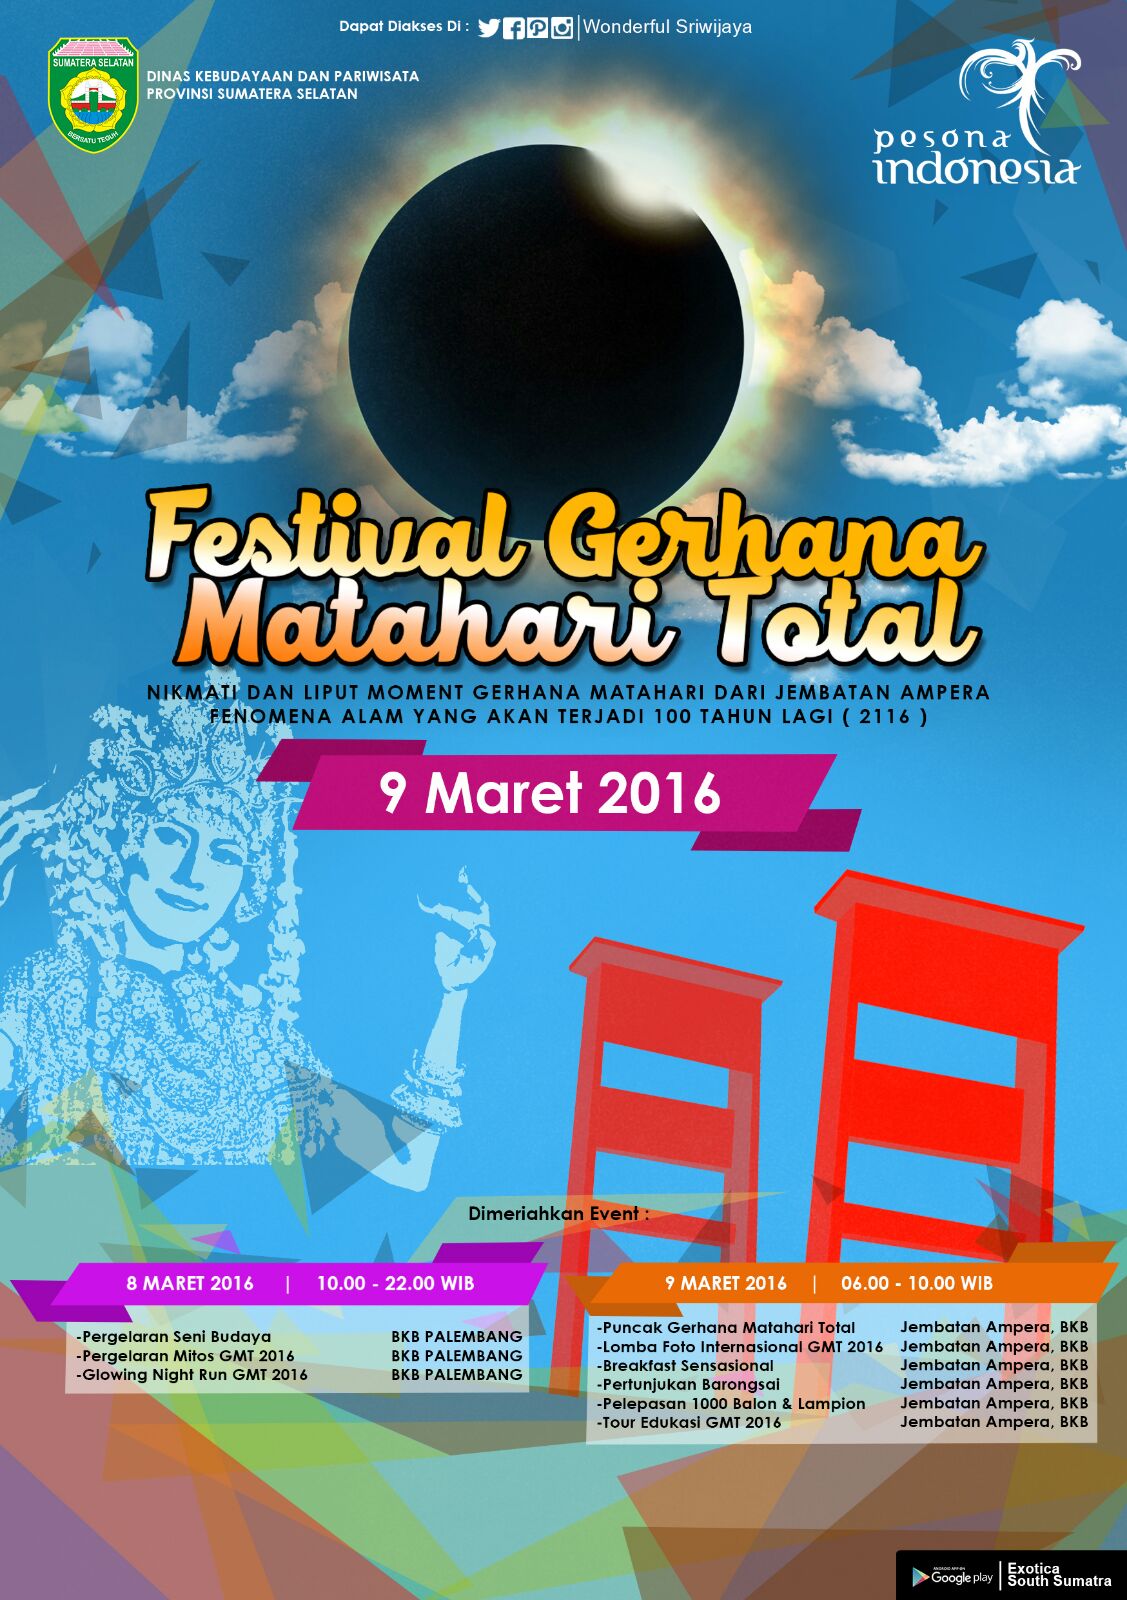 Festival Gerhana Matahari Total Dyazafryan